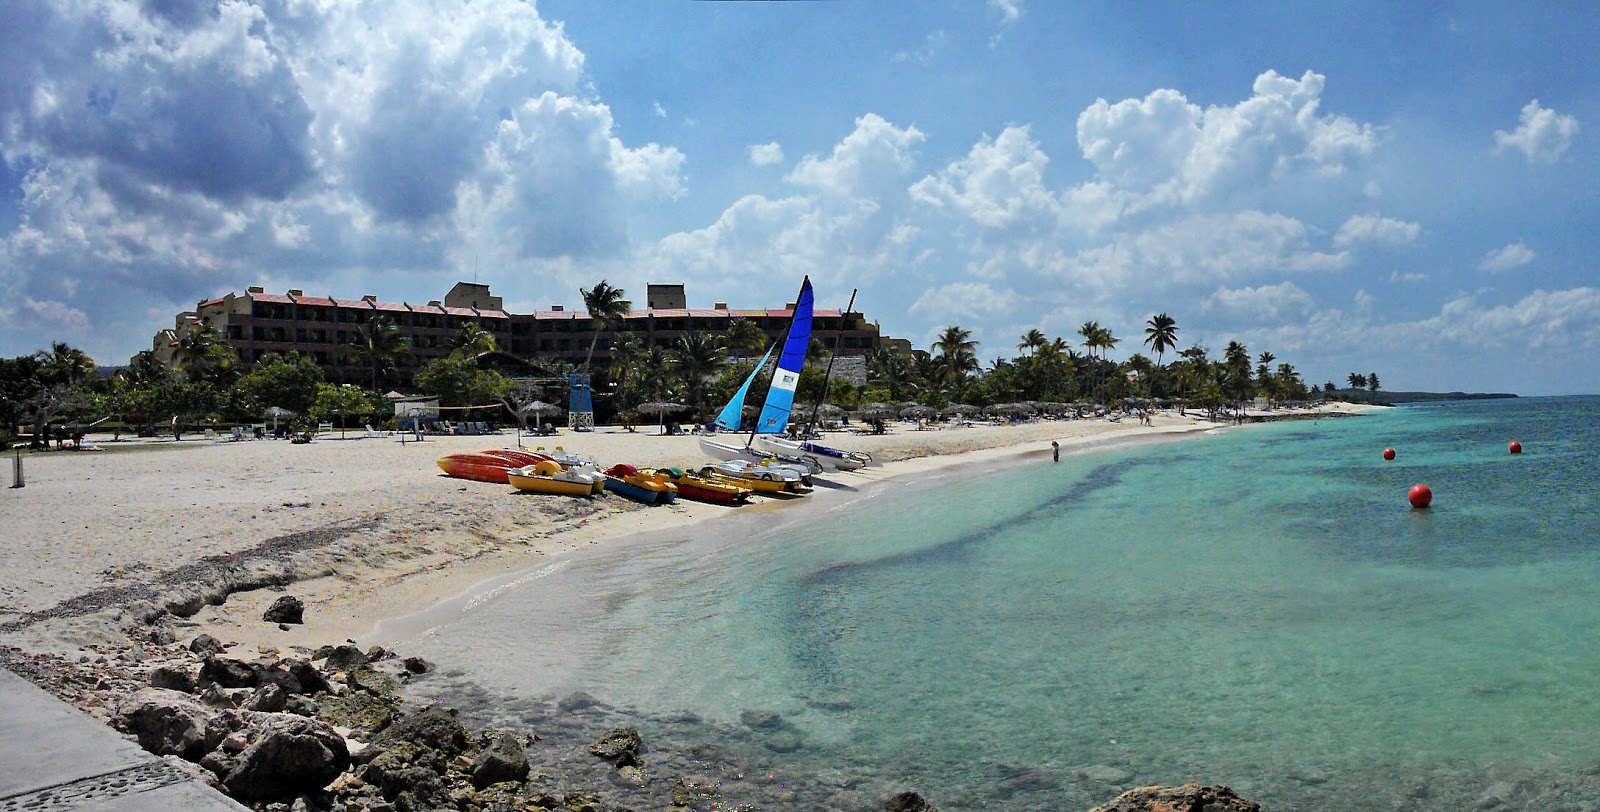 Foto di Playa Bani con una superficie del sabbia luminosa